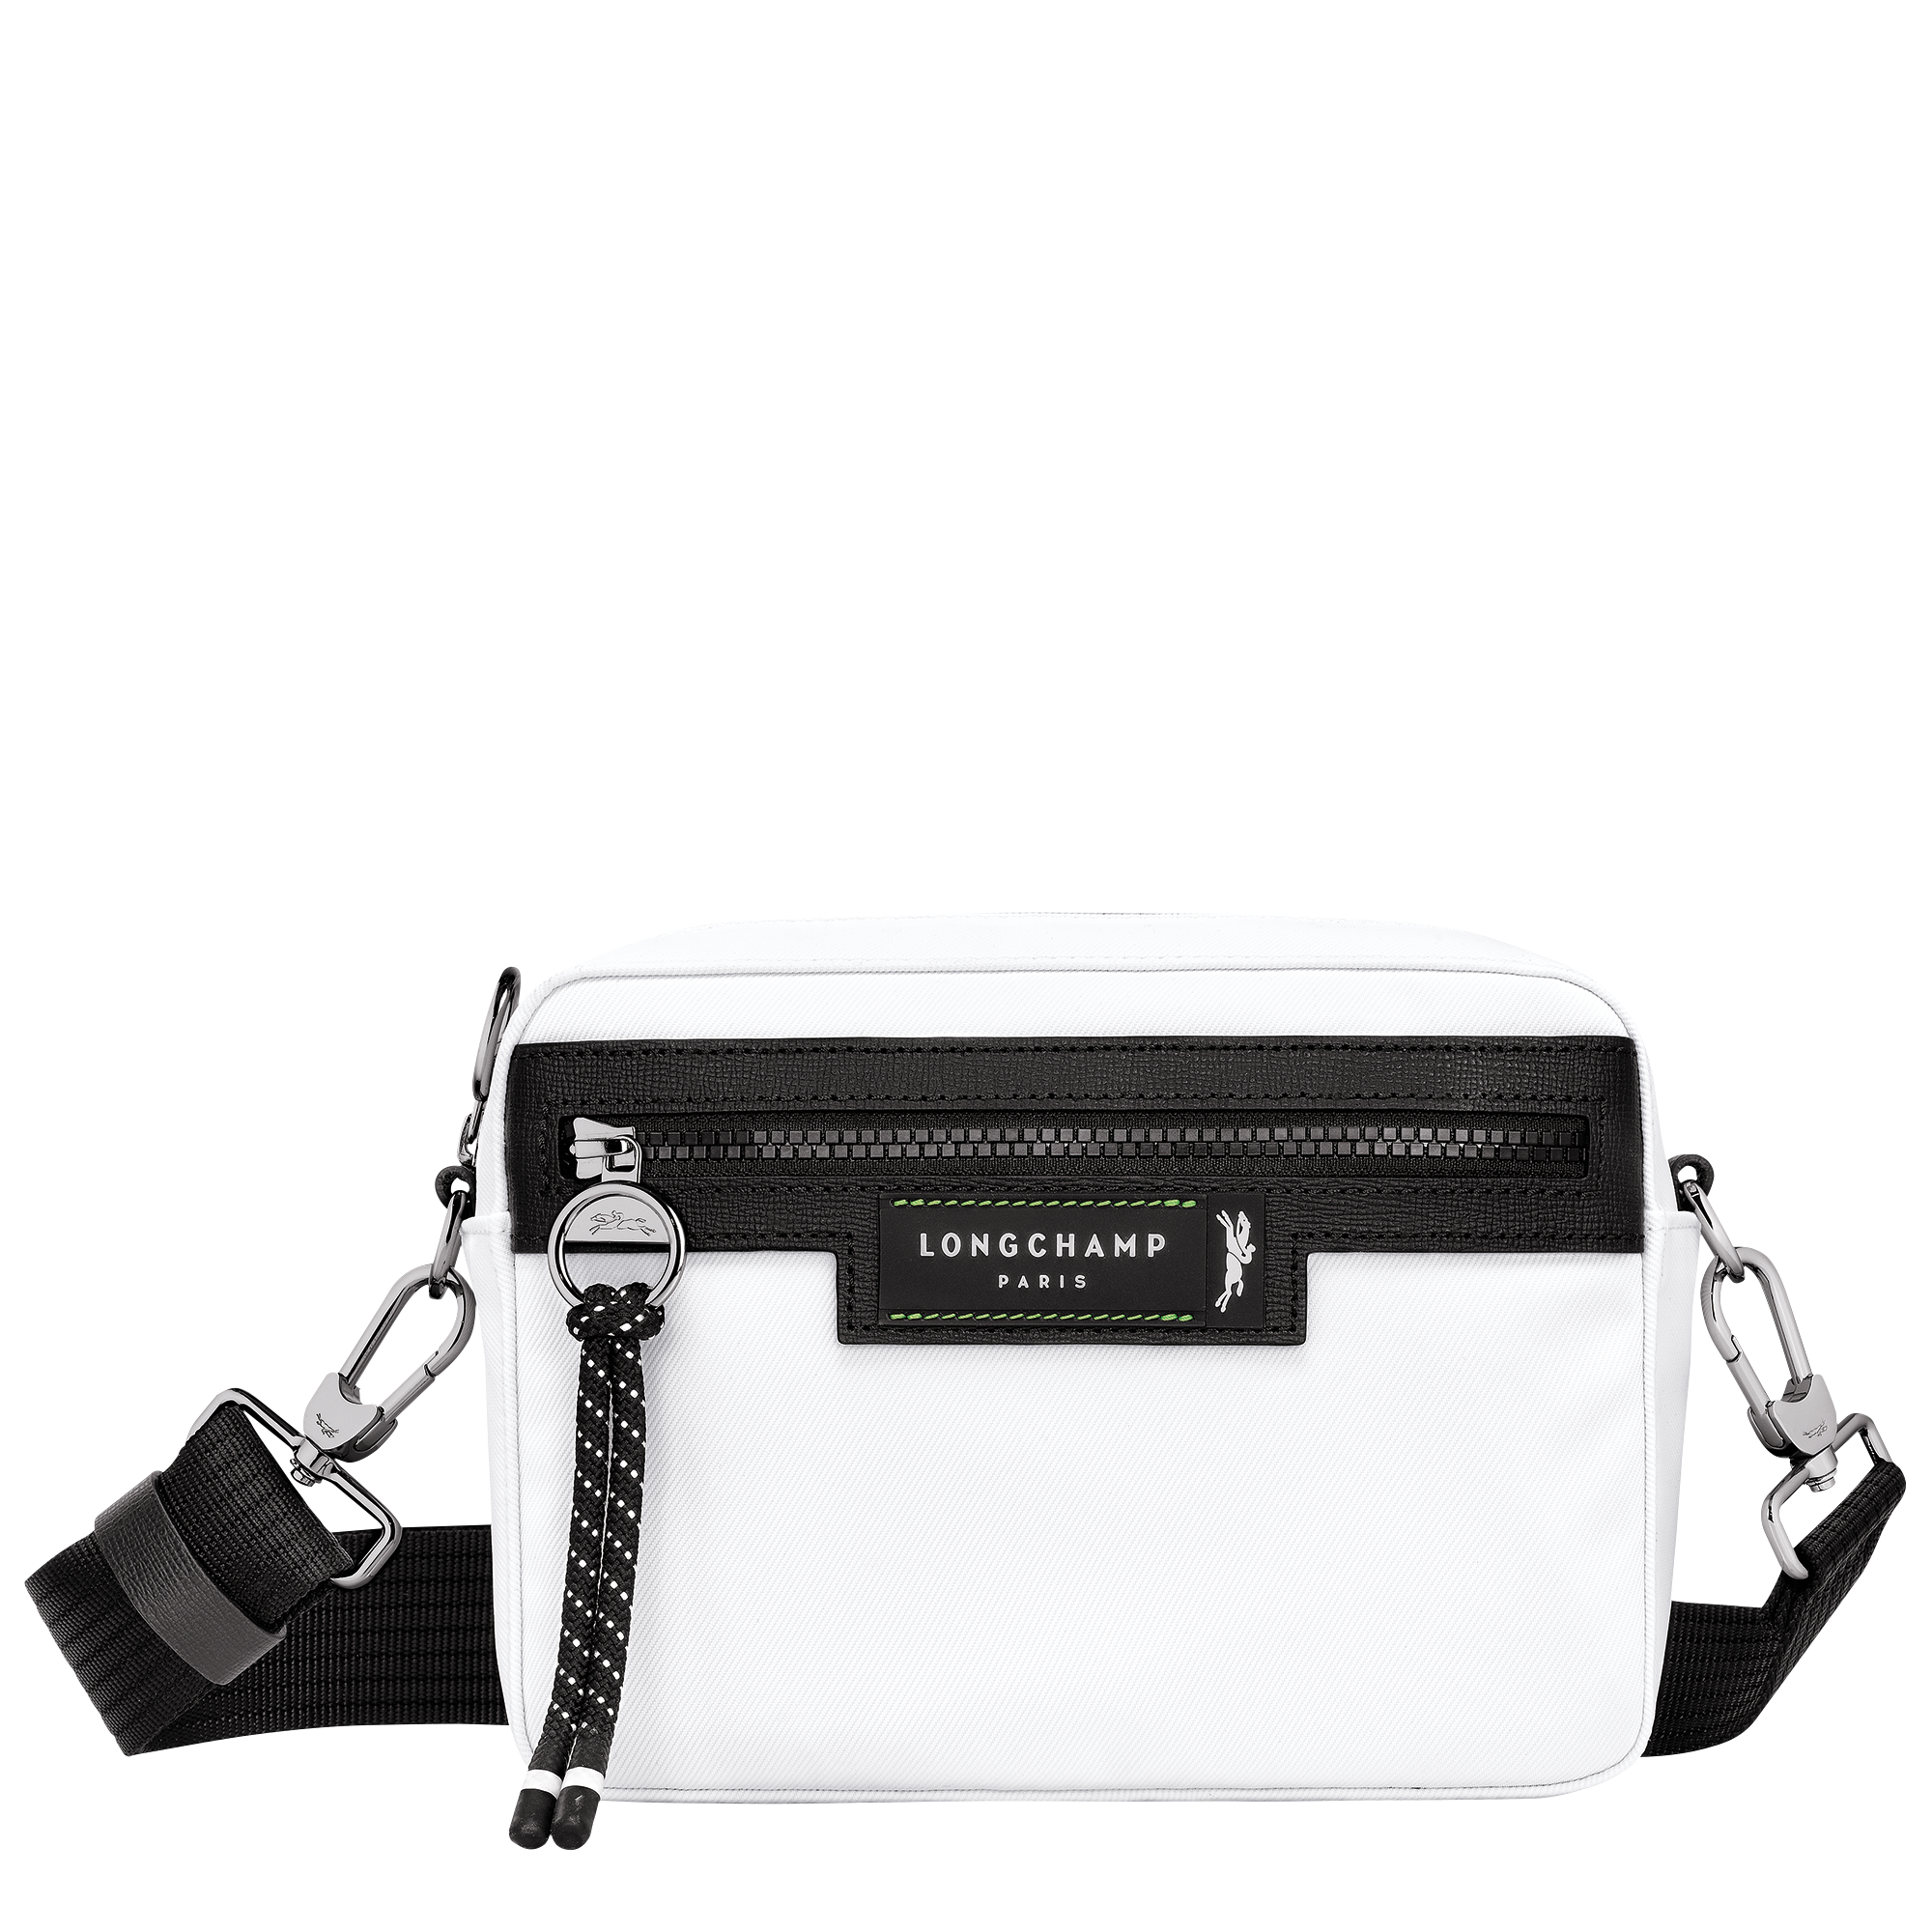 Le Pliage Energy Camera bag S, Blanc